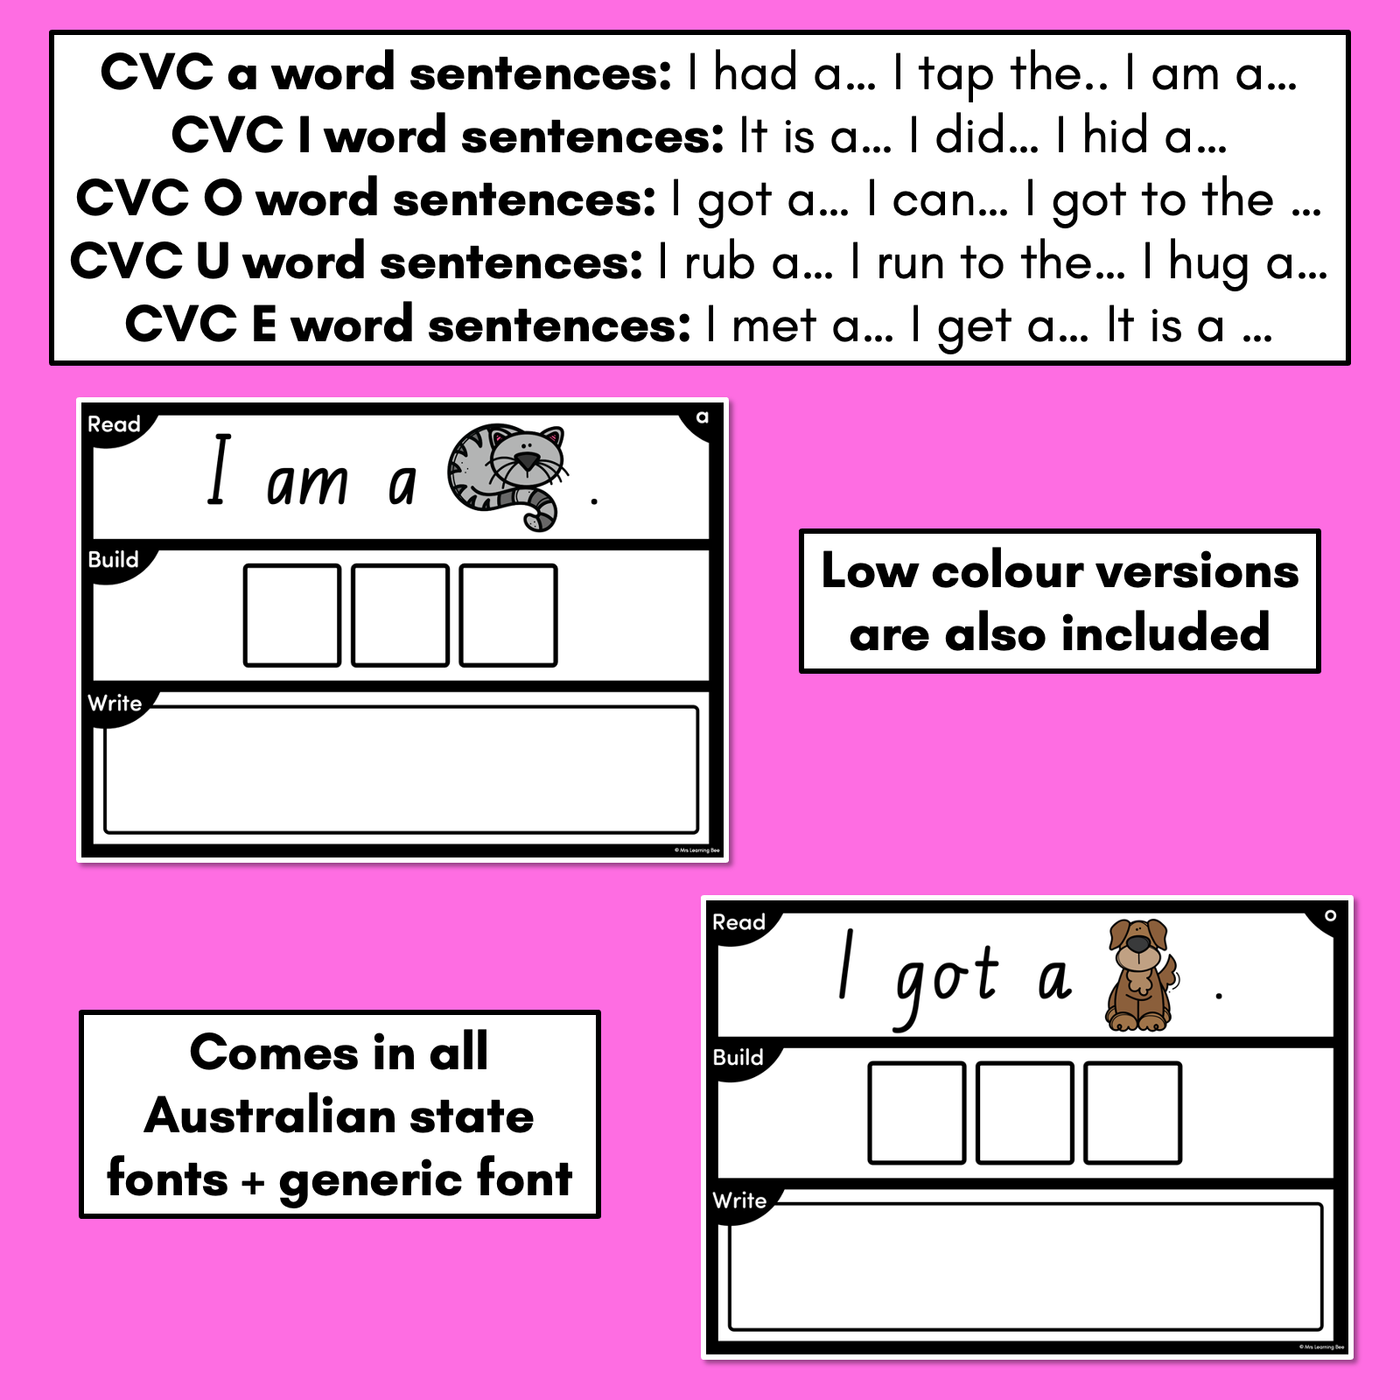 DECODABLE SENTENCE MATS WITH CVC WORDS: Read It, Build It, Write It